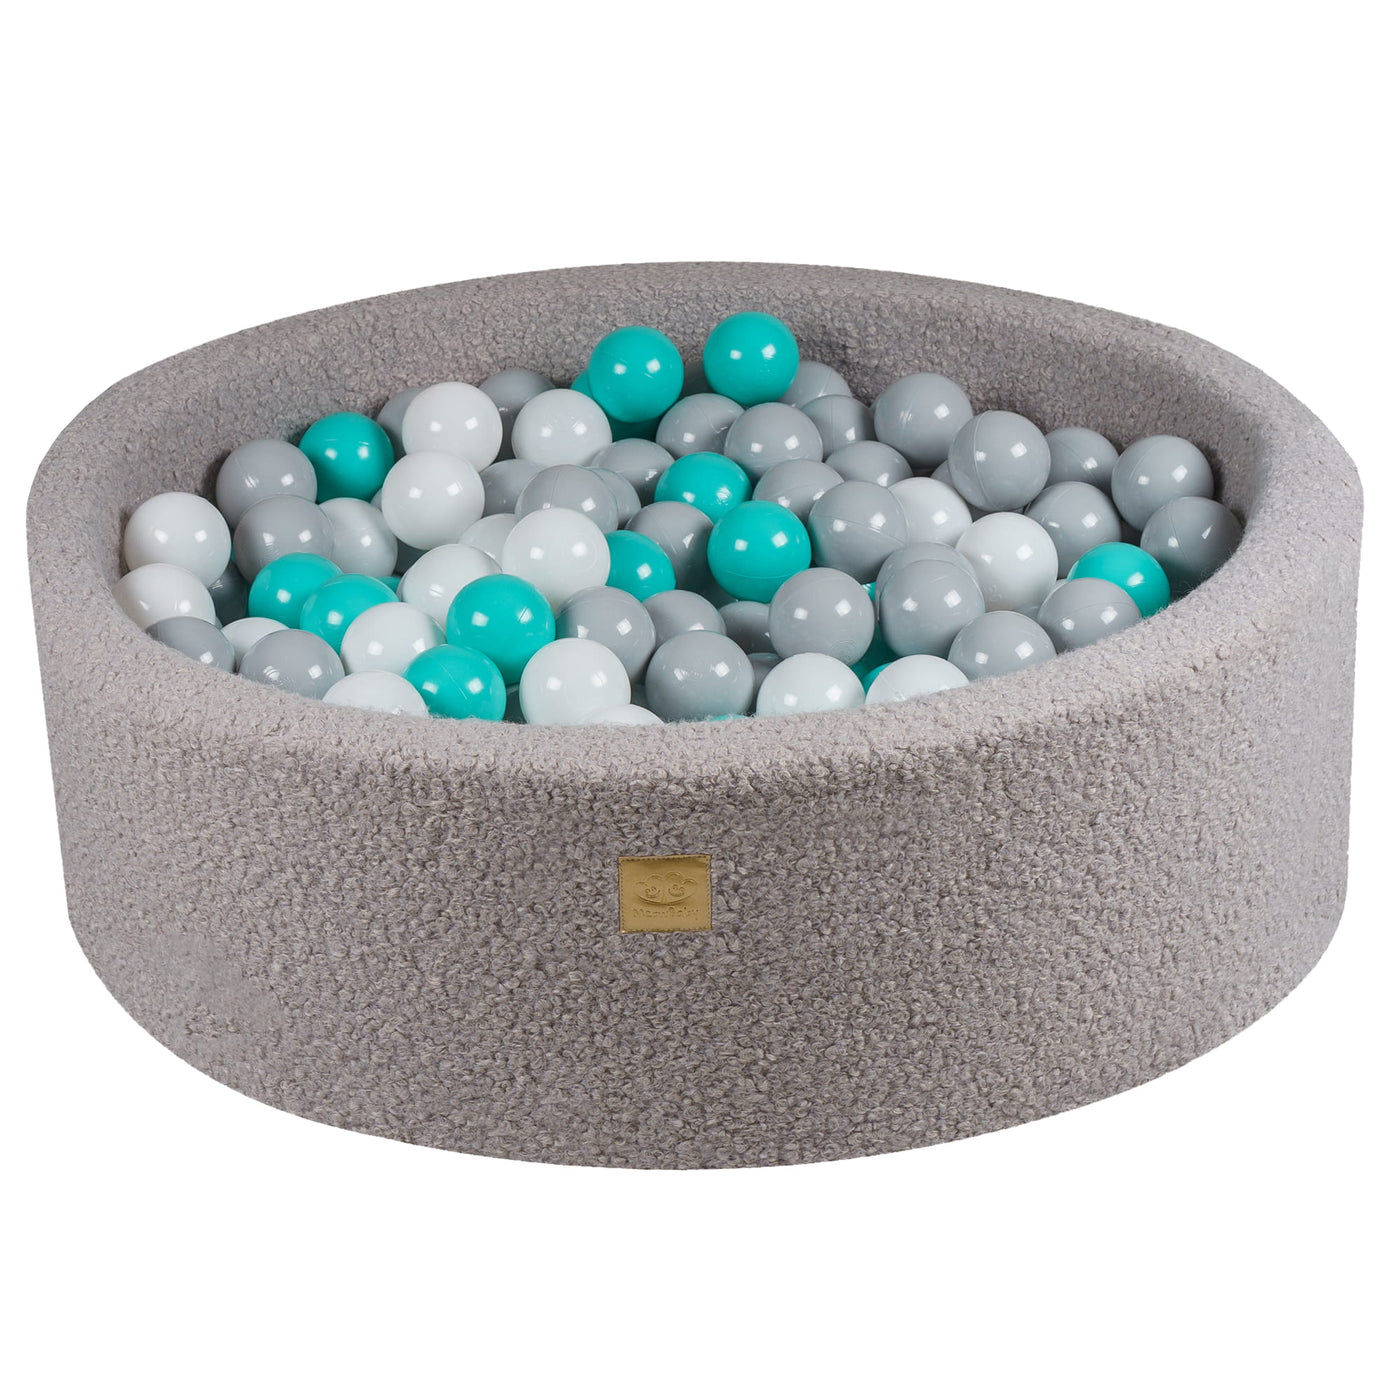 Grey Boucle Ball Pit | White, Grey & Turquoise Balls